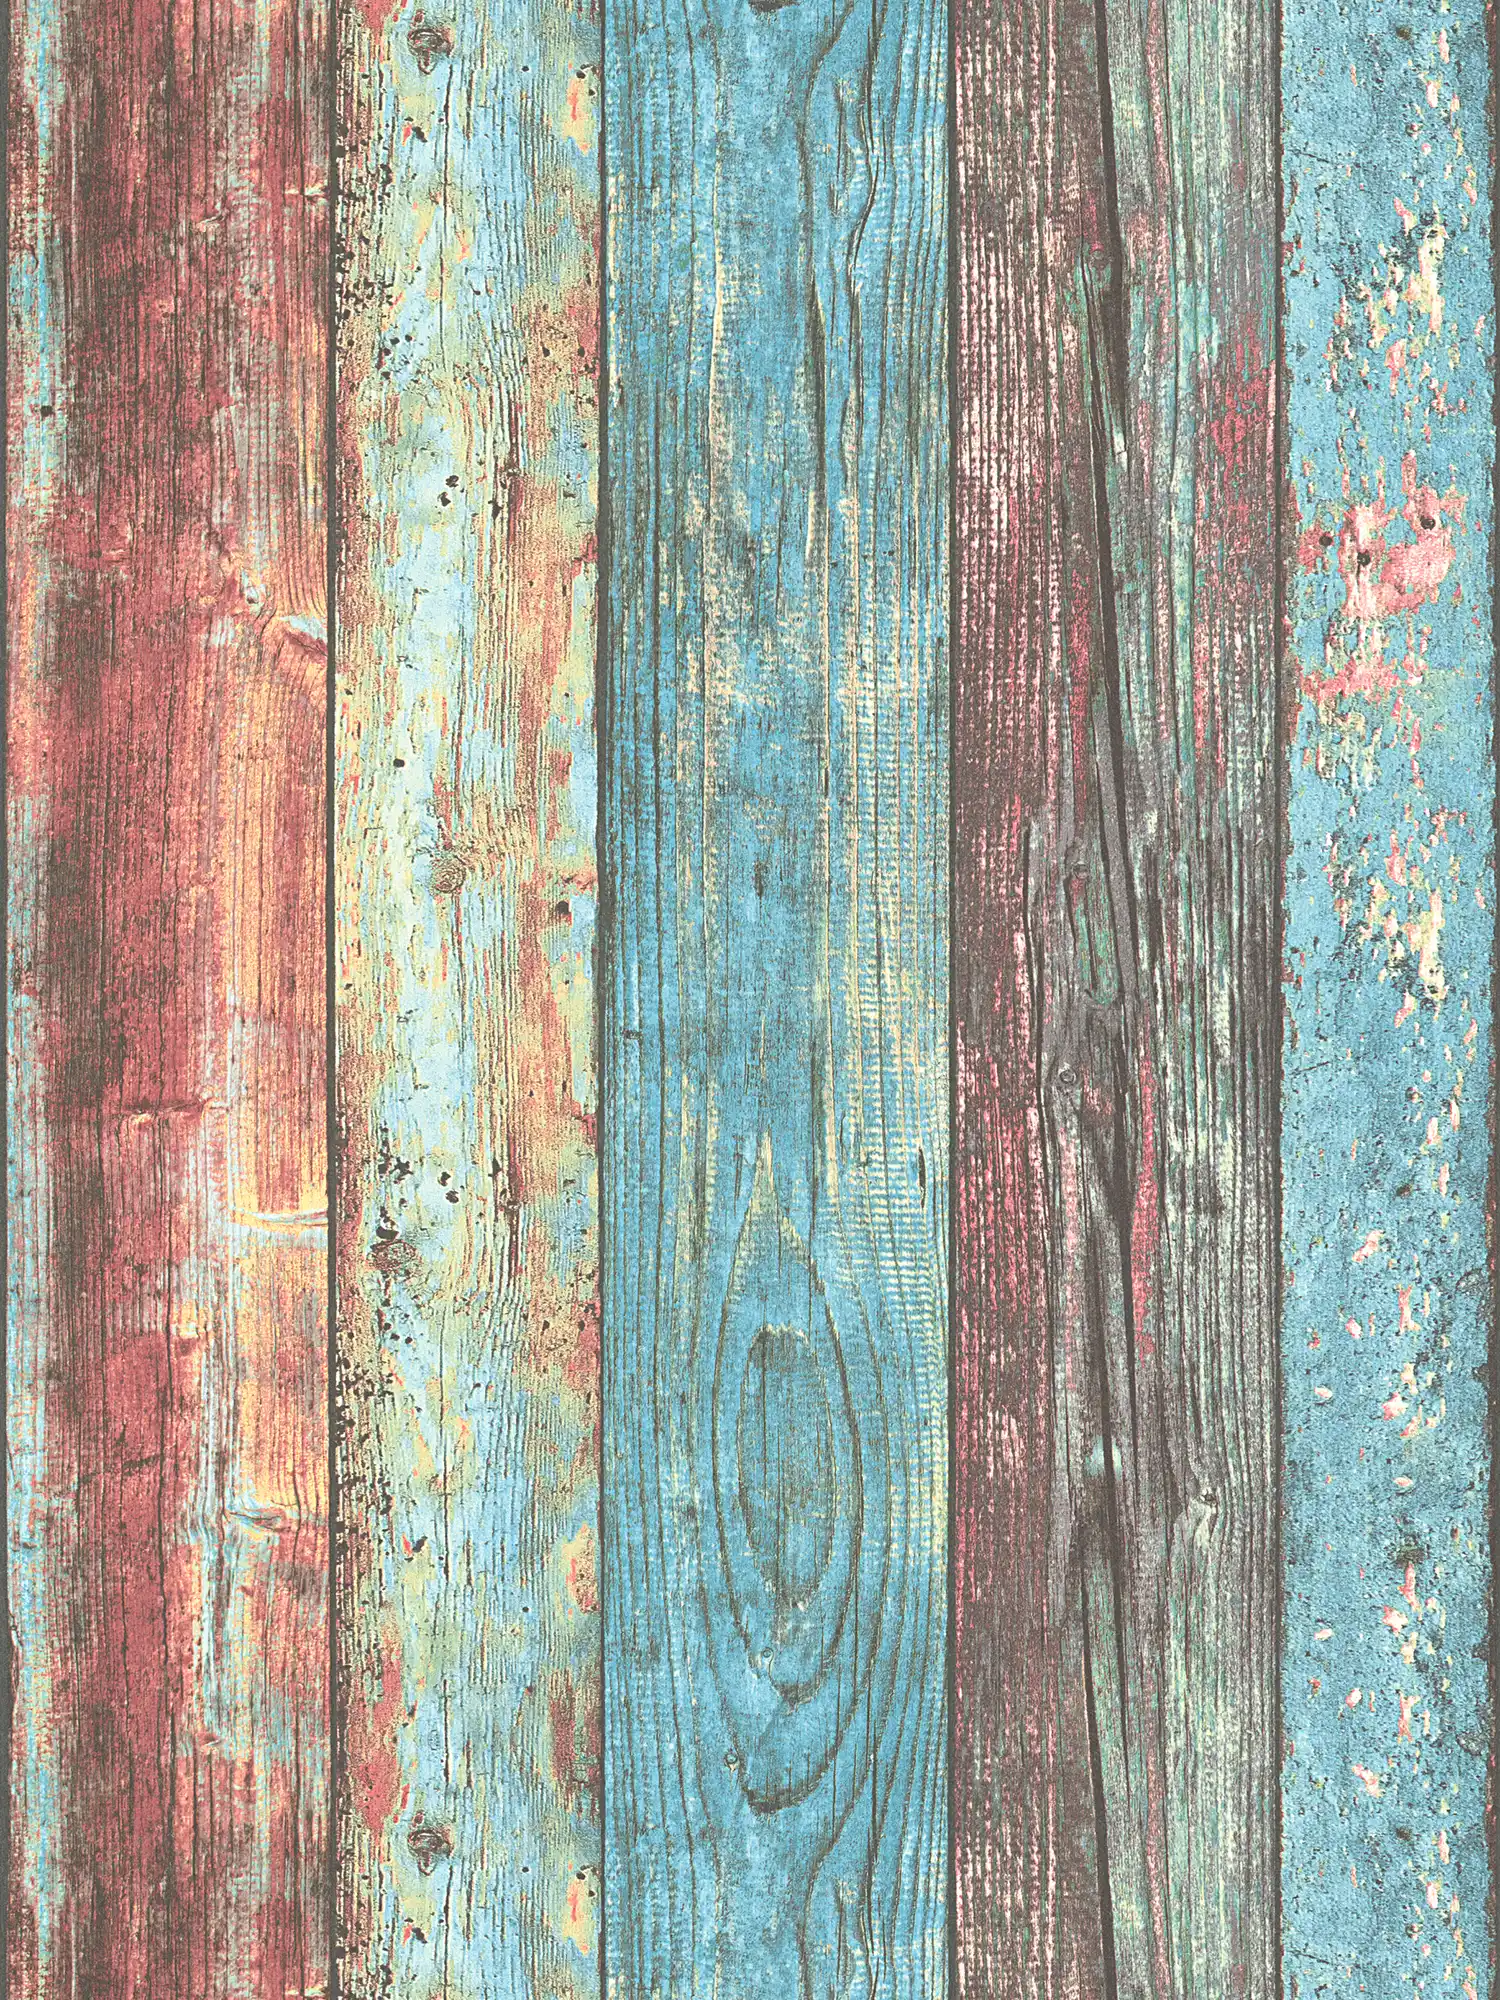 Bunte Holztapete Shabby Chic Style mit Bretter-Muster – Blau, Rot, Braun
